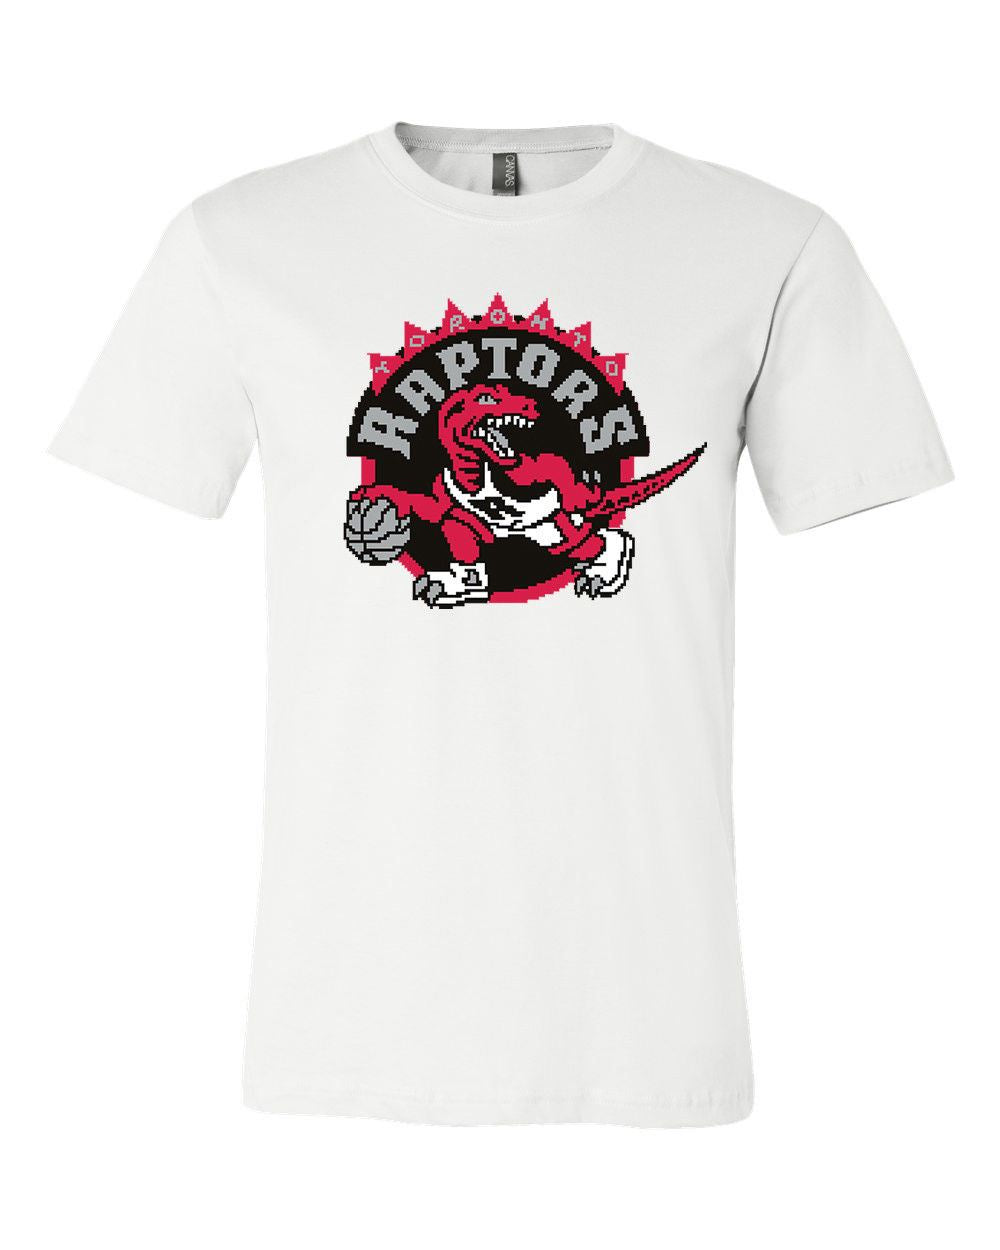 Toronto Raptors Tees, Raptors T-Shirts